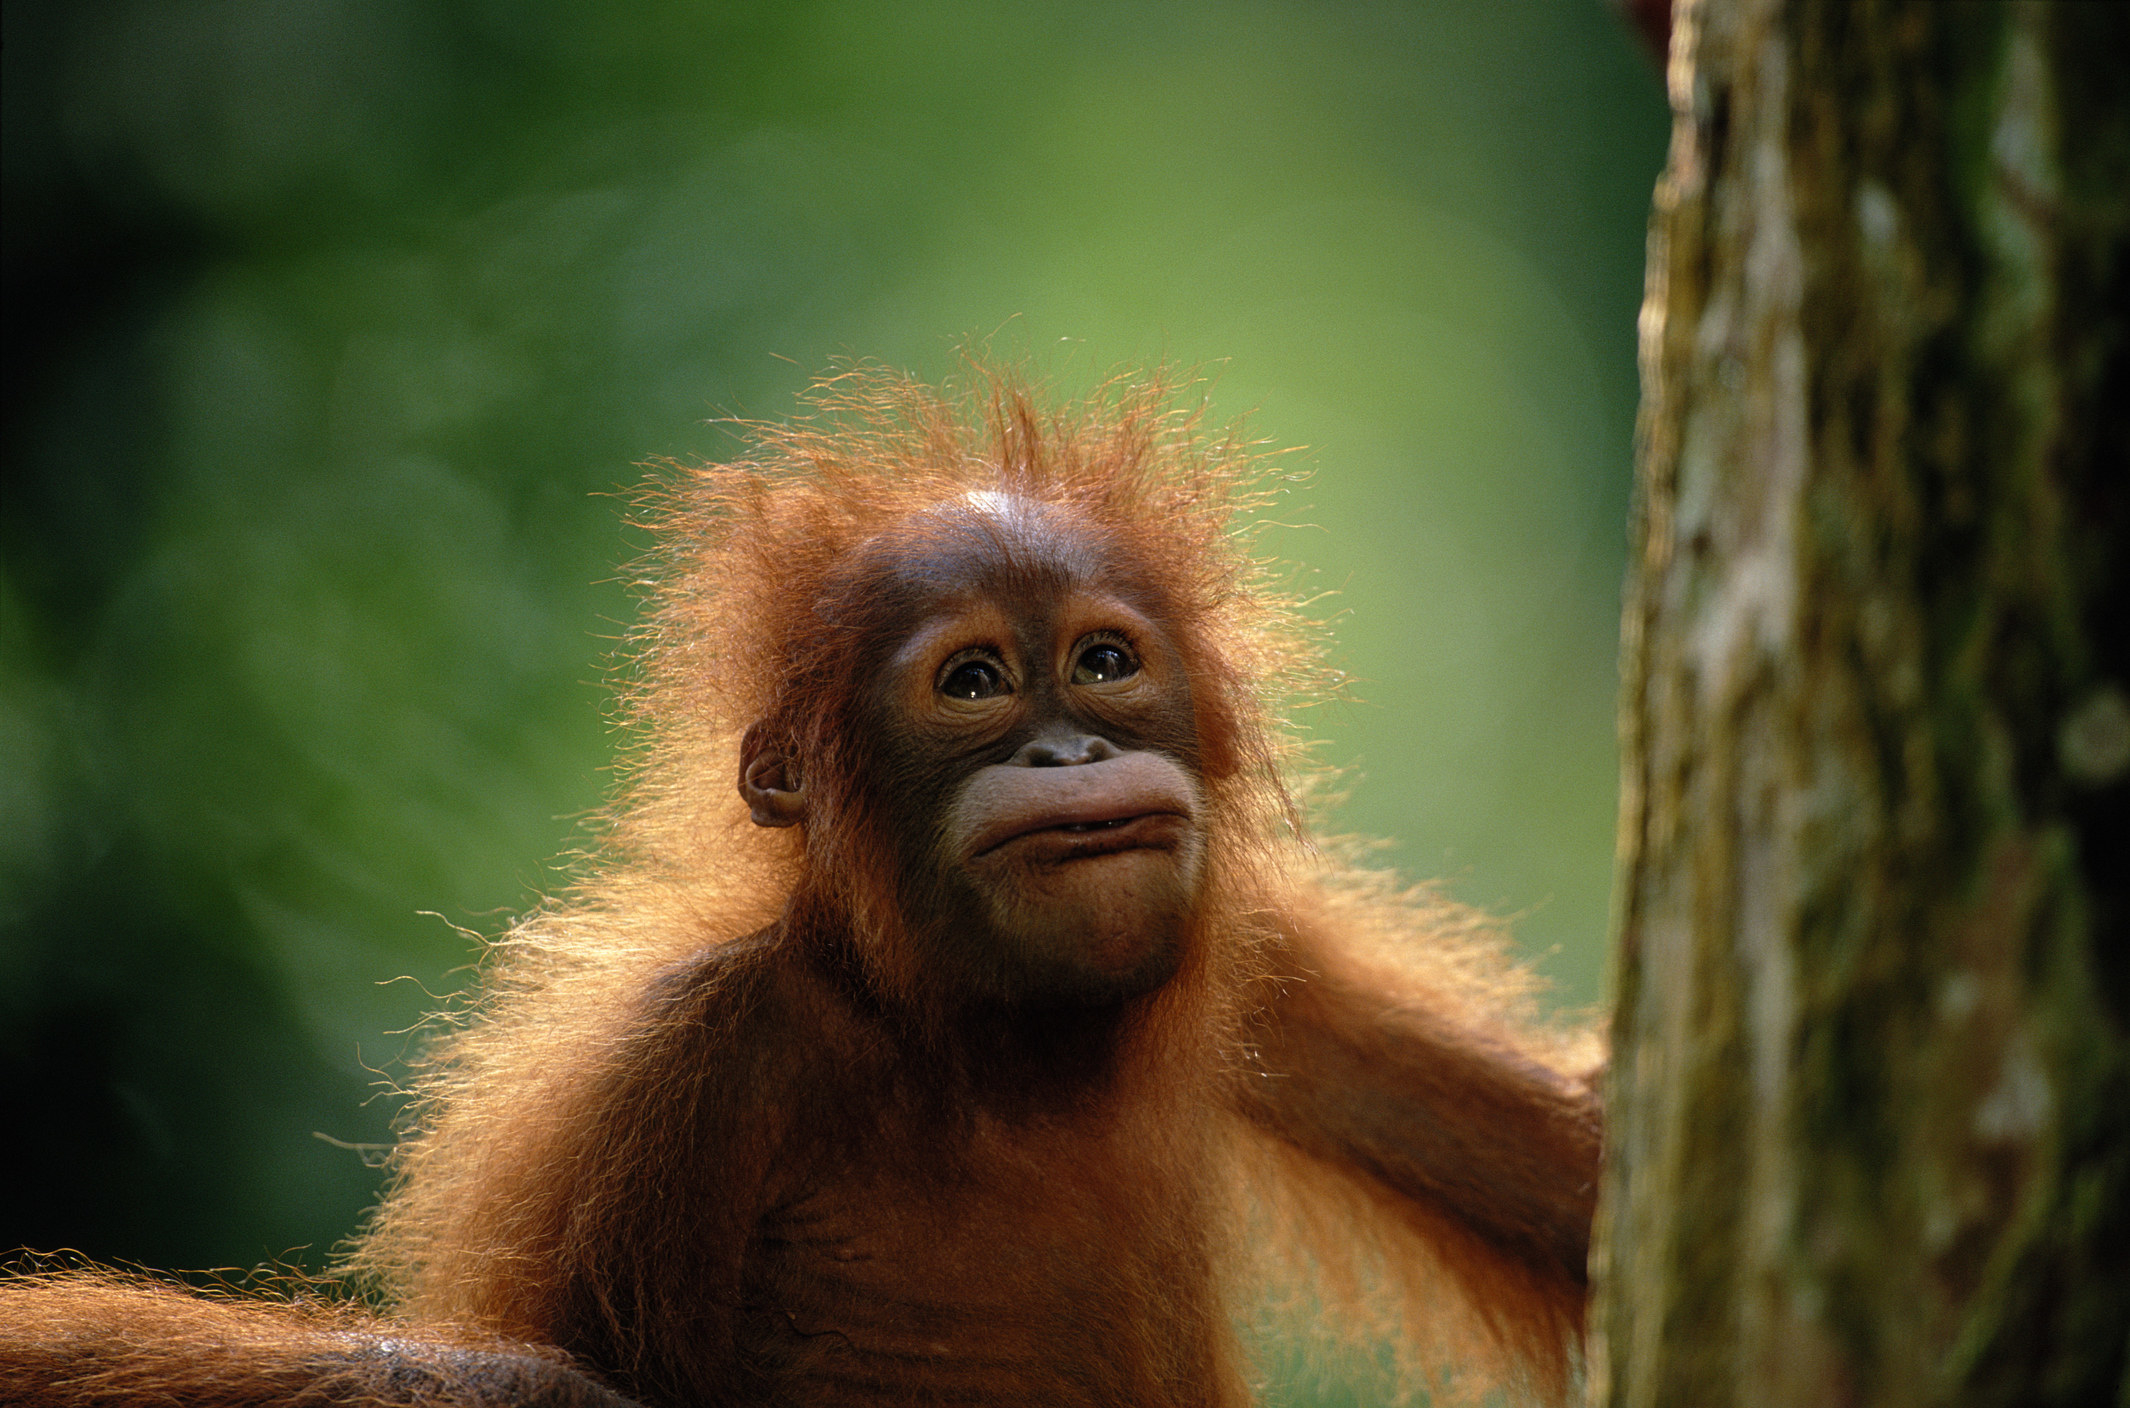 baby orangutan that looks sheepish